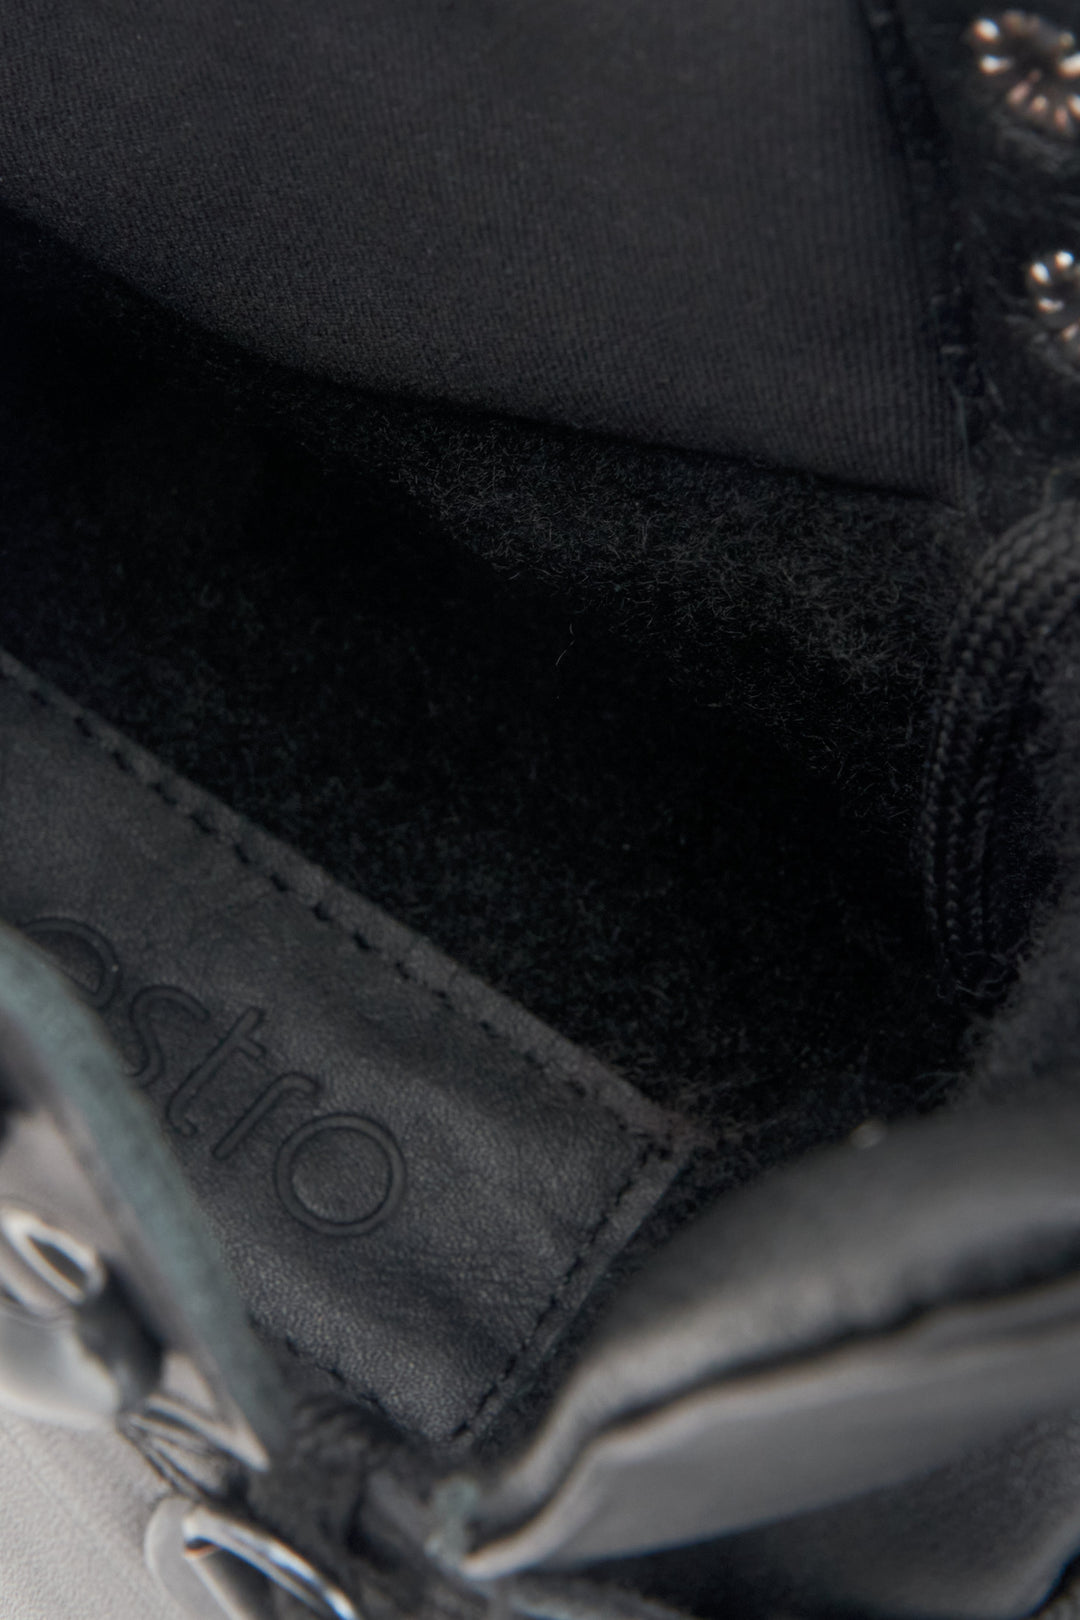 Men's black Estro boots made of genuine leather.